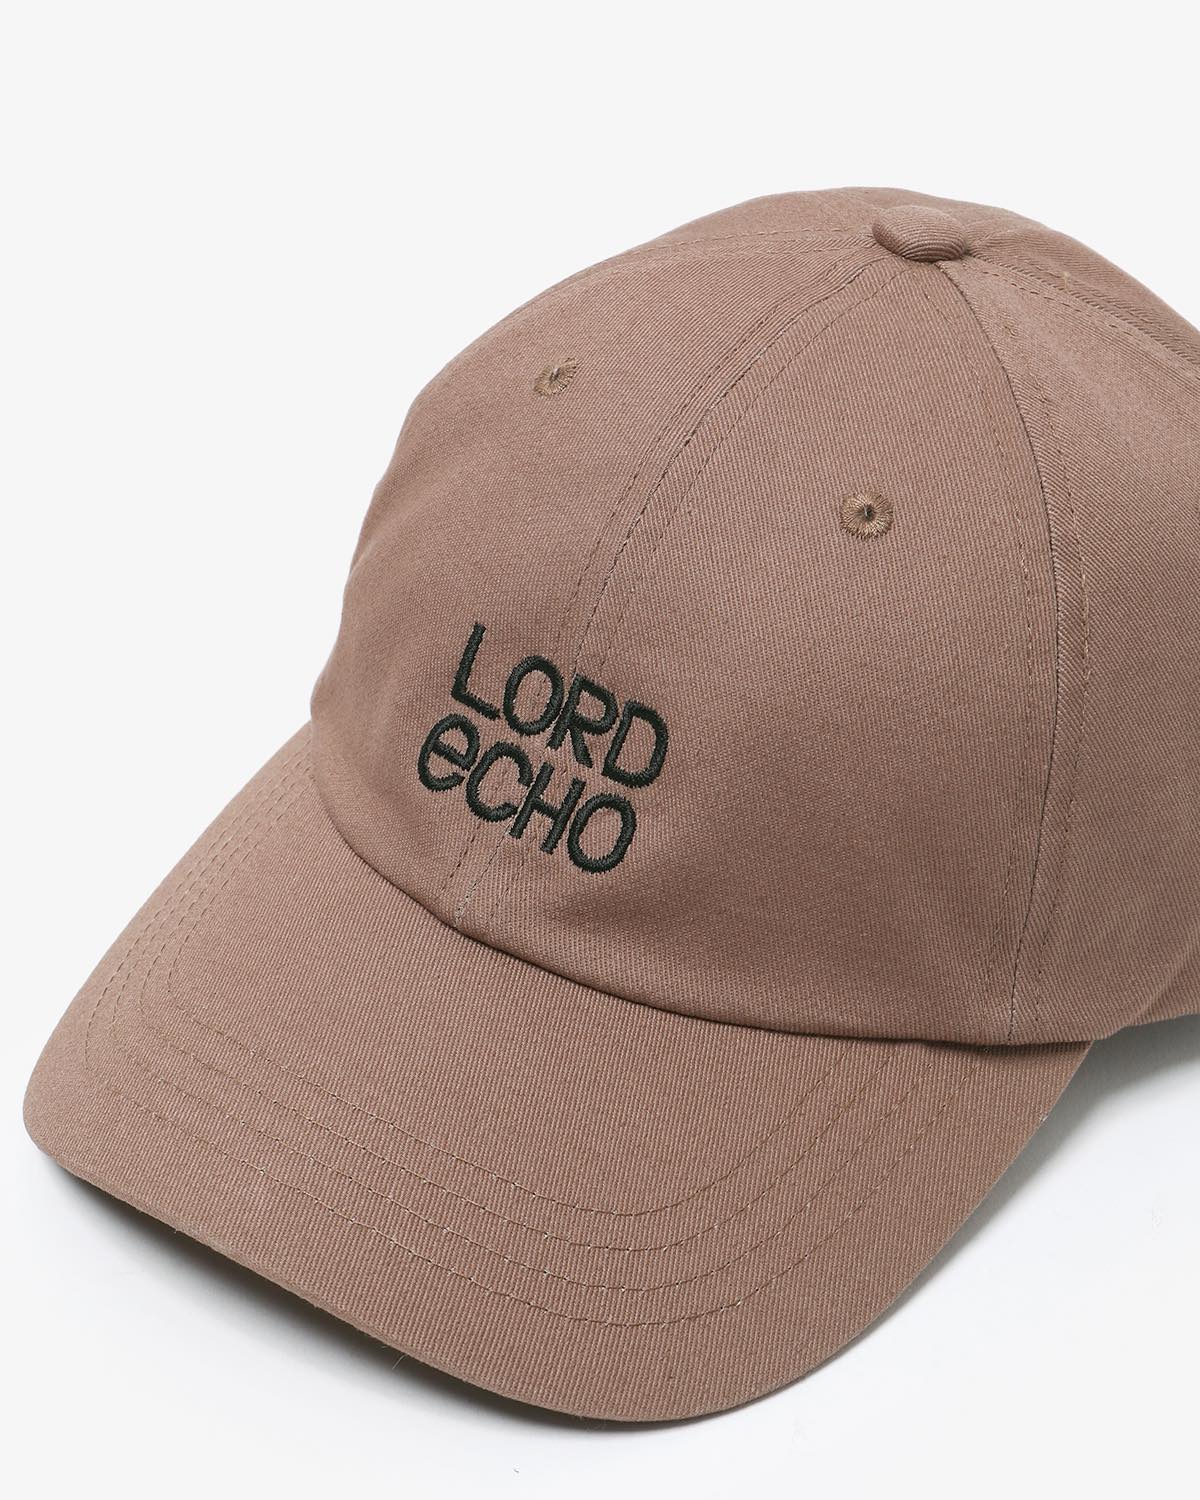 LORD ECHO CAP